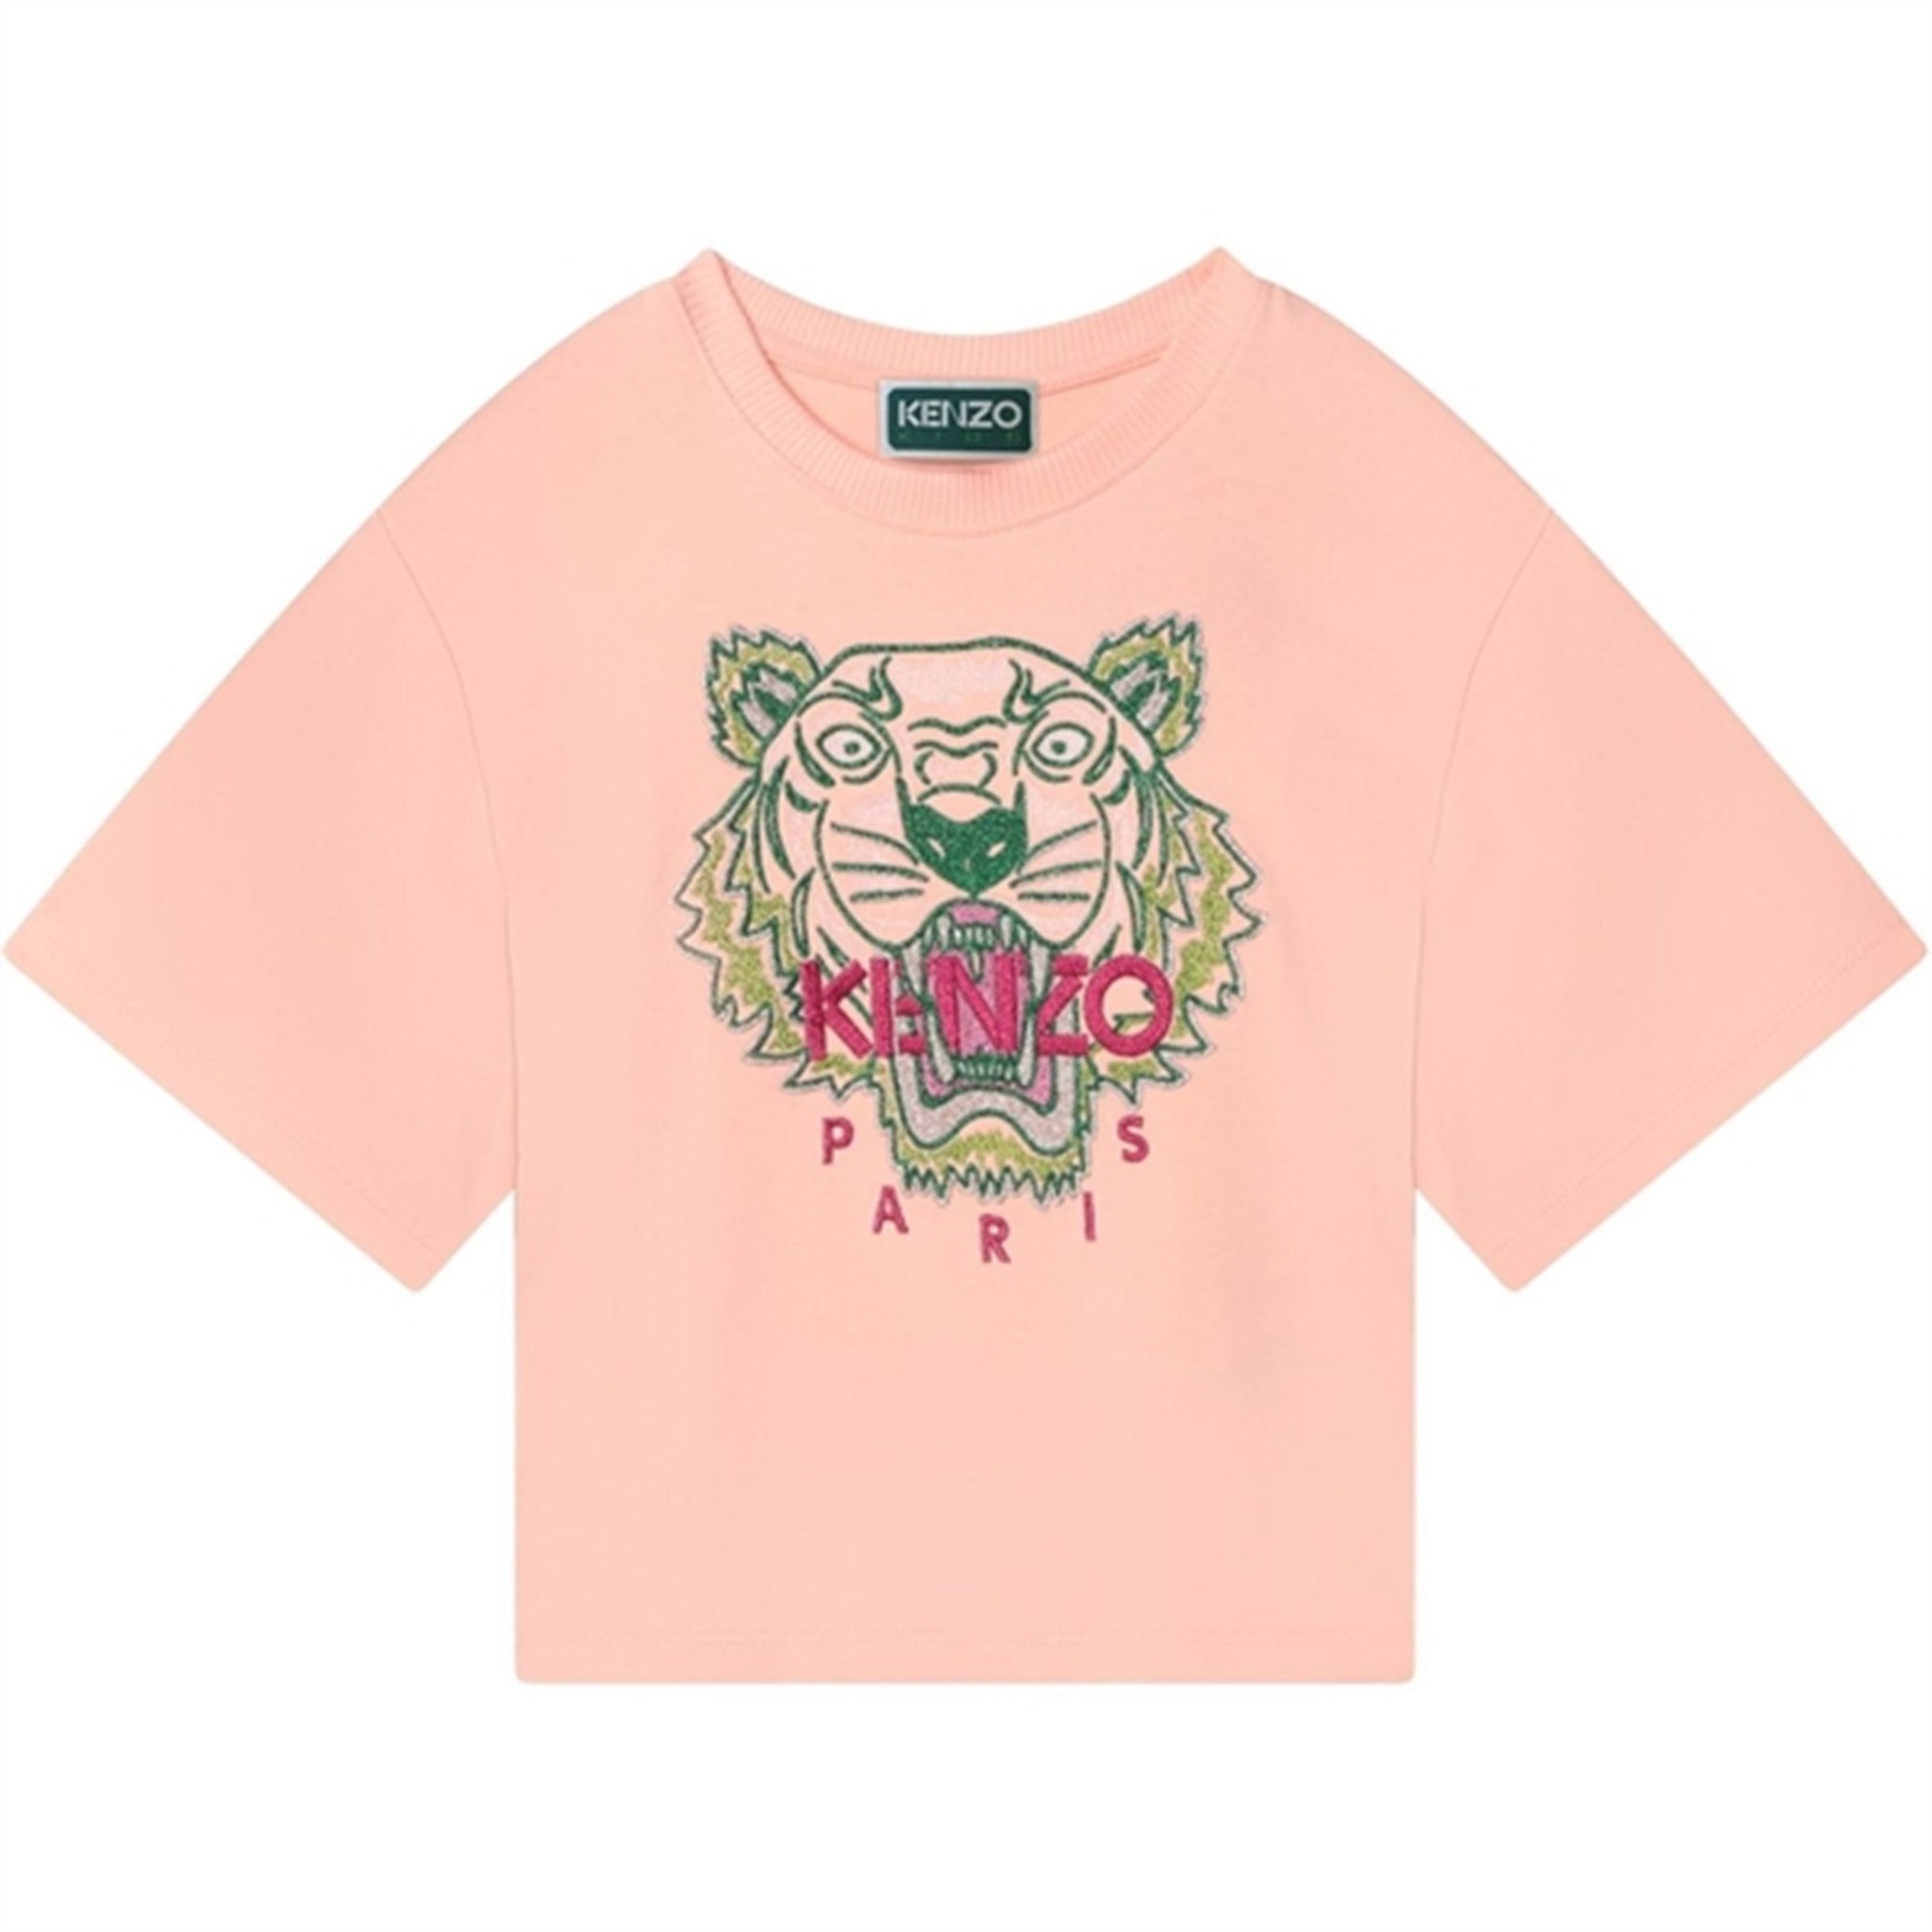 Kenzo T-shirt Pale Pink